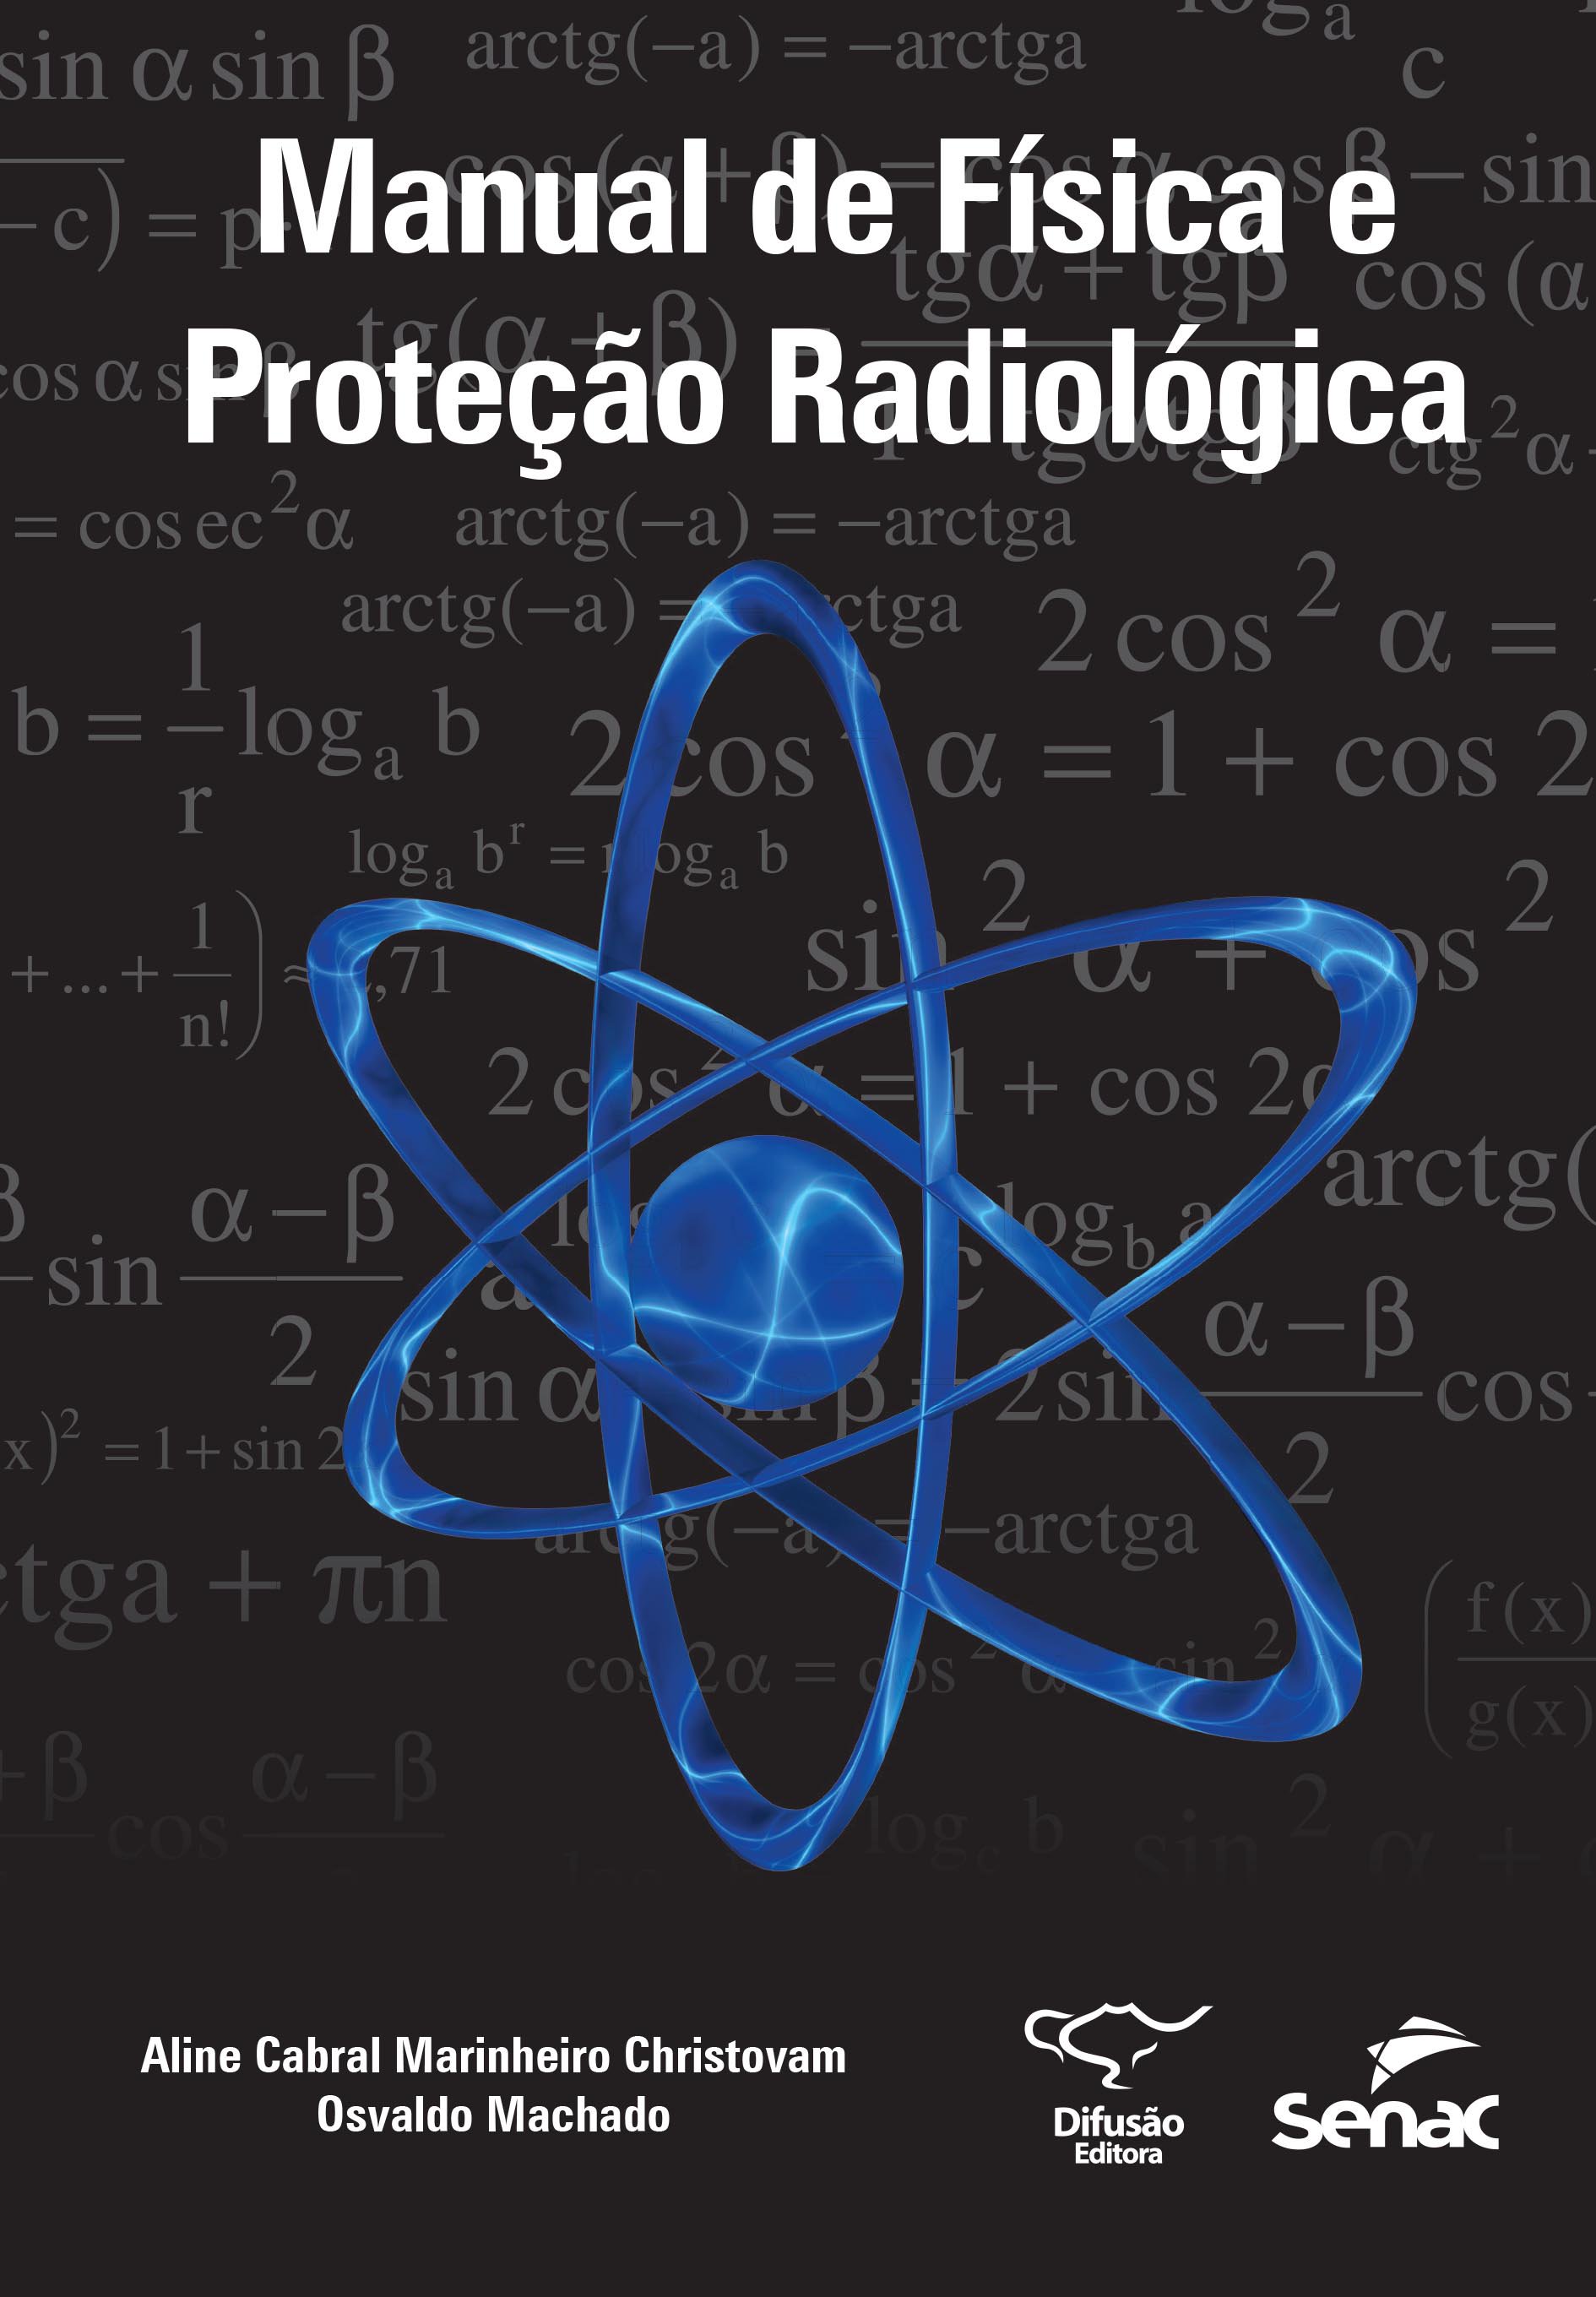 Manual de Fisica e Protecao Radiologica